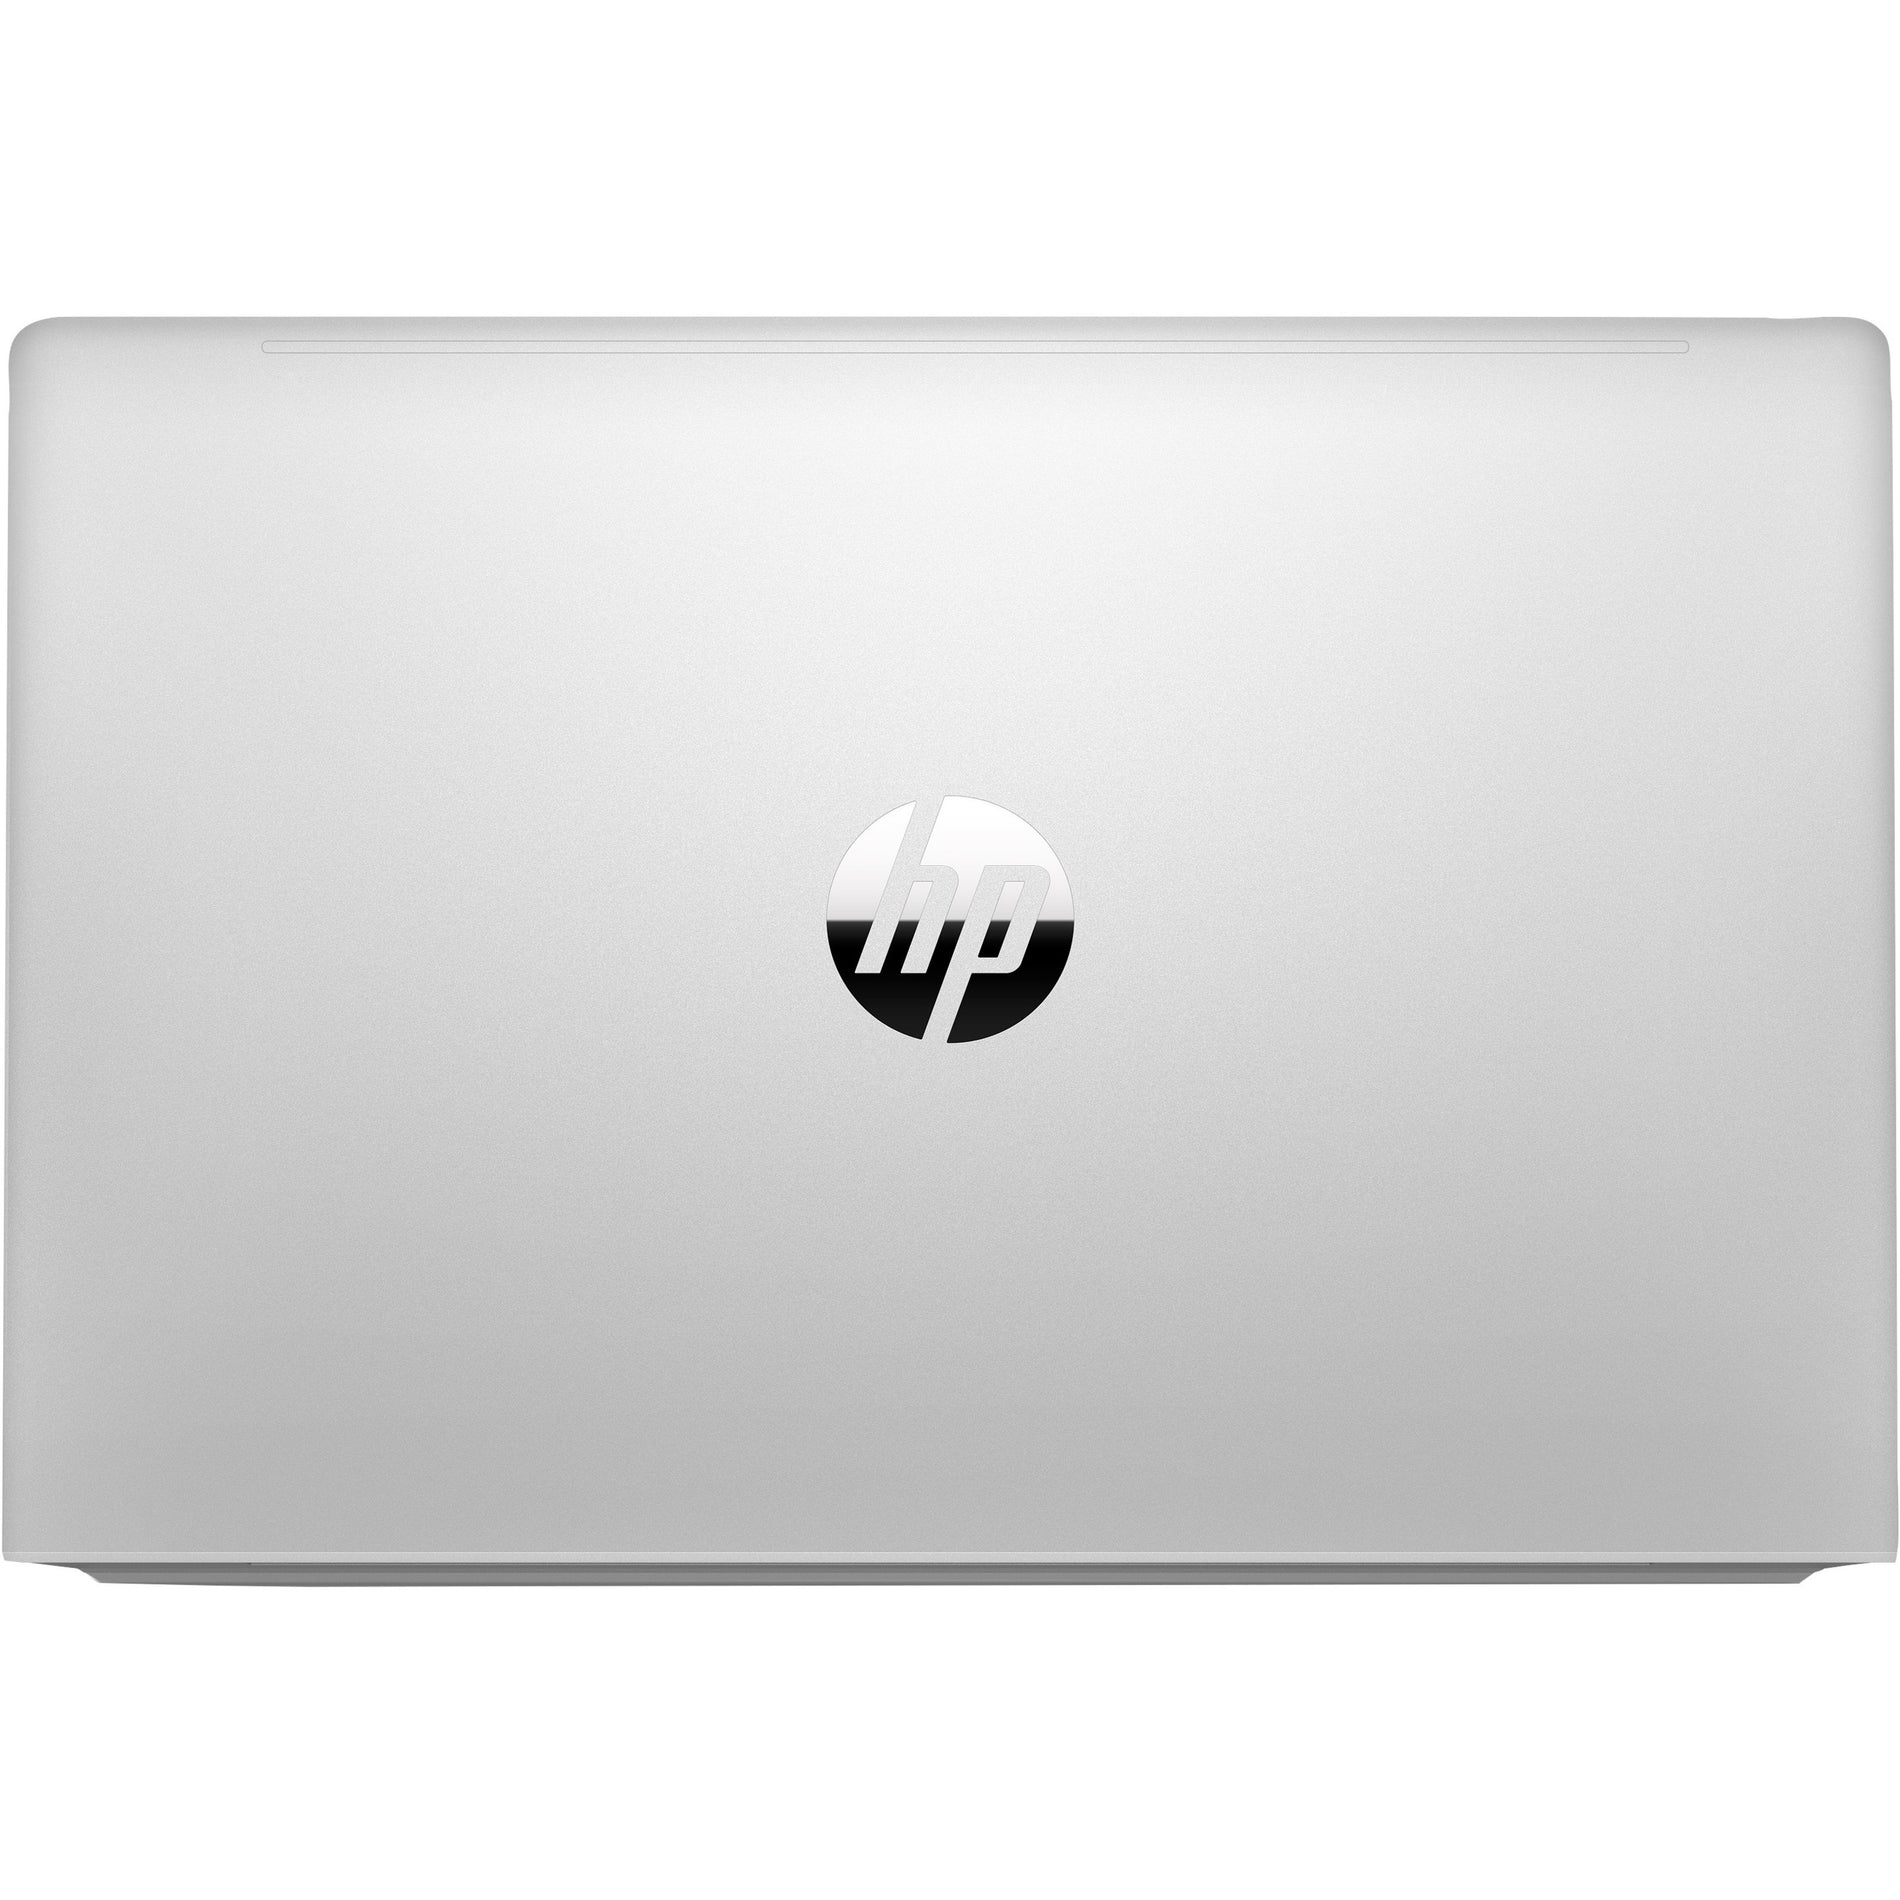 HP Pro mt440 G3 14" Thin Client Notebook, Full HD, Intel Celeron 12th Gen, 8GB RAM, 256GB SSD